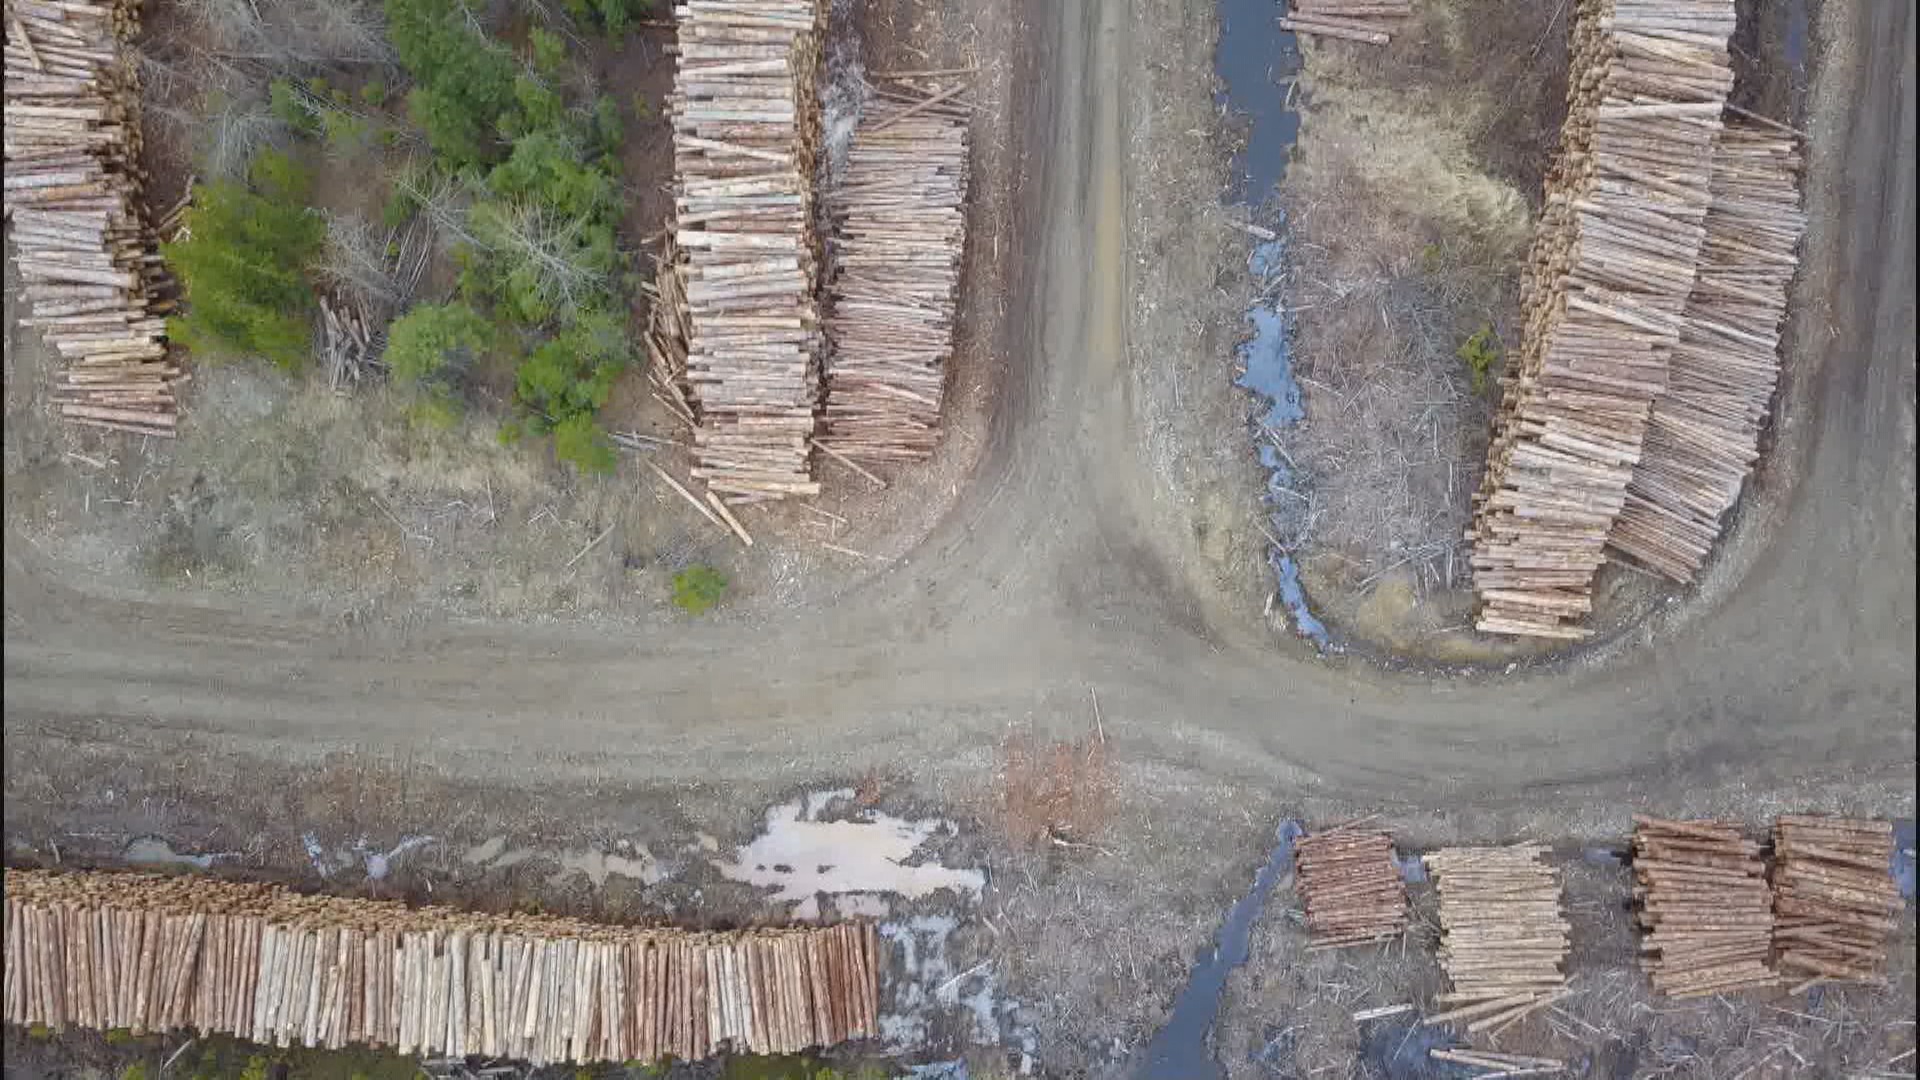 B.C. forestry practices under scrutiny in documentary shown in U.K.